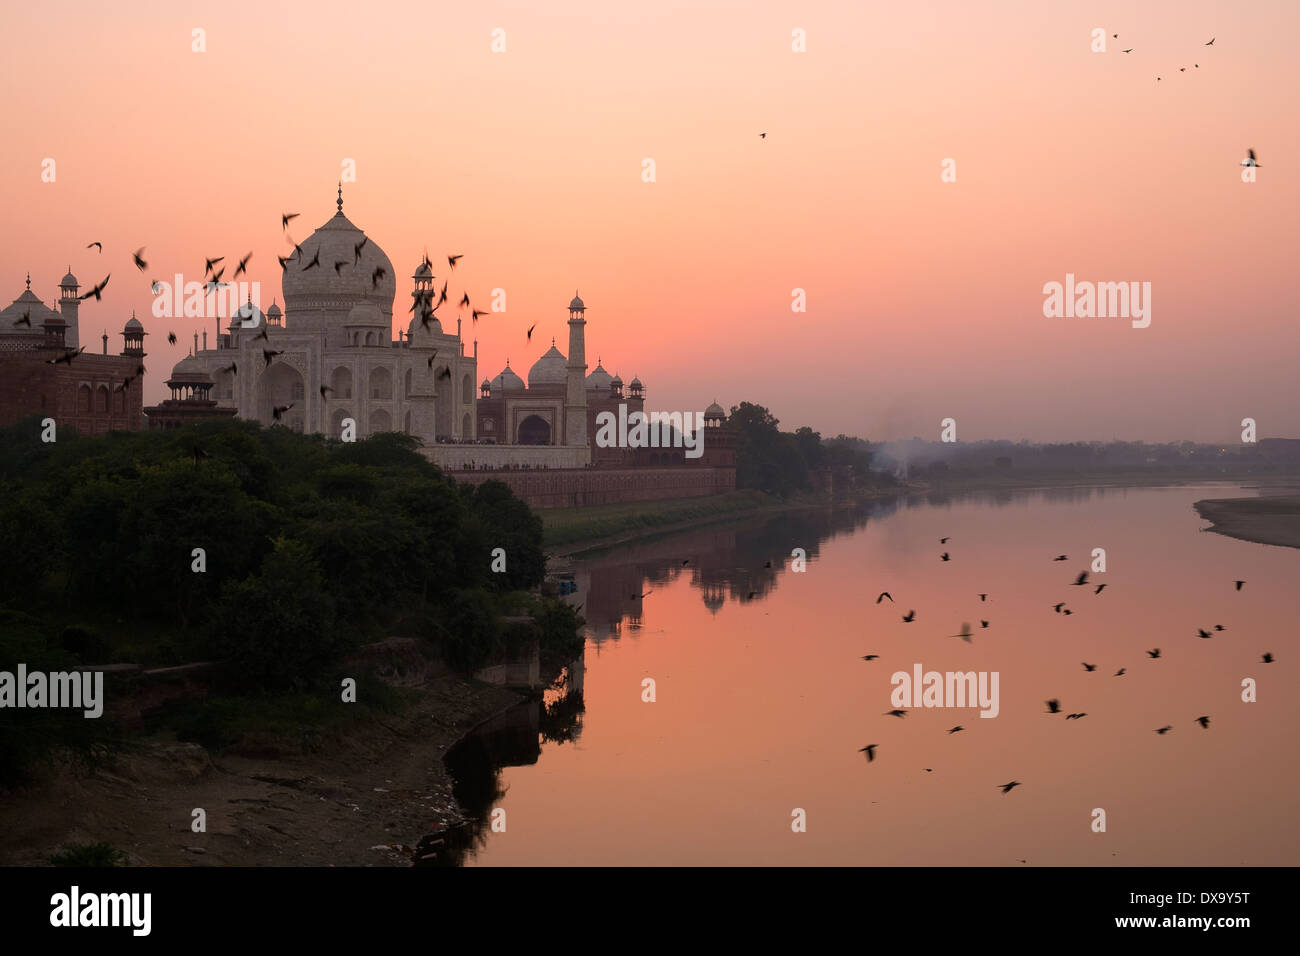 Indien, in der Nähe von Agra, Uttar Pradesh Vögel im Flug Taj Mahal in der Dämmerung Stockfoto